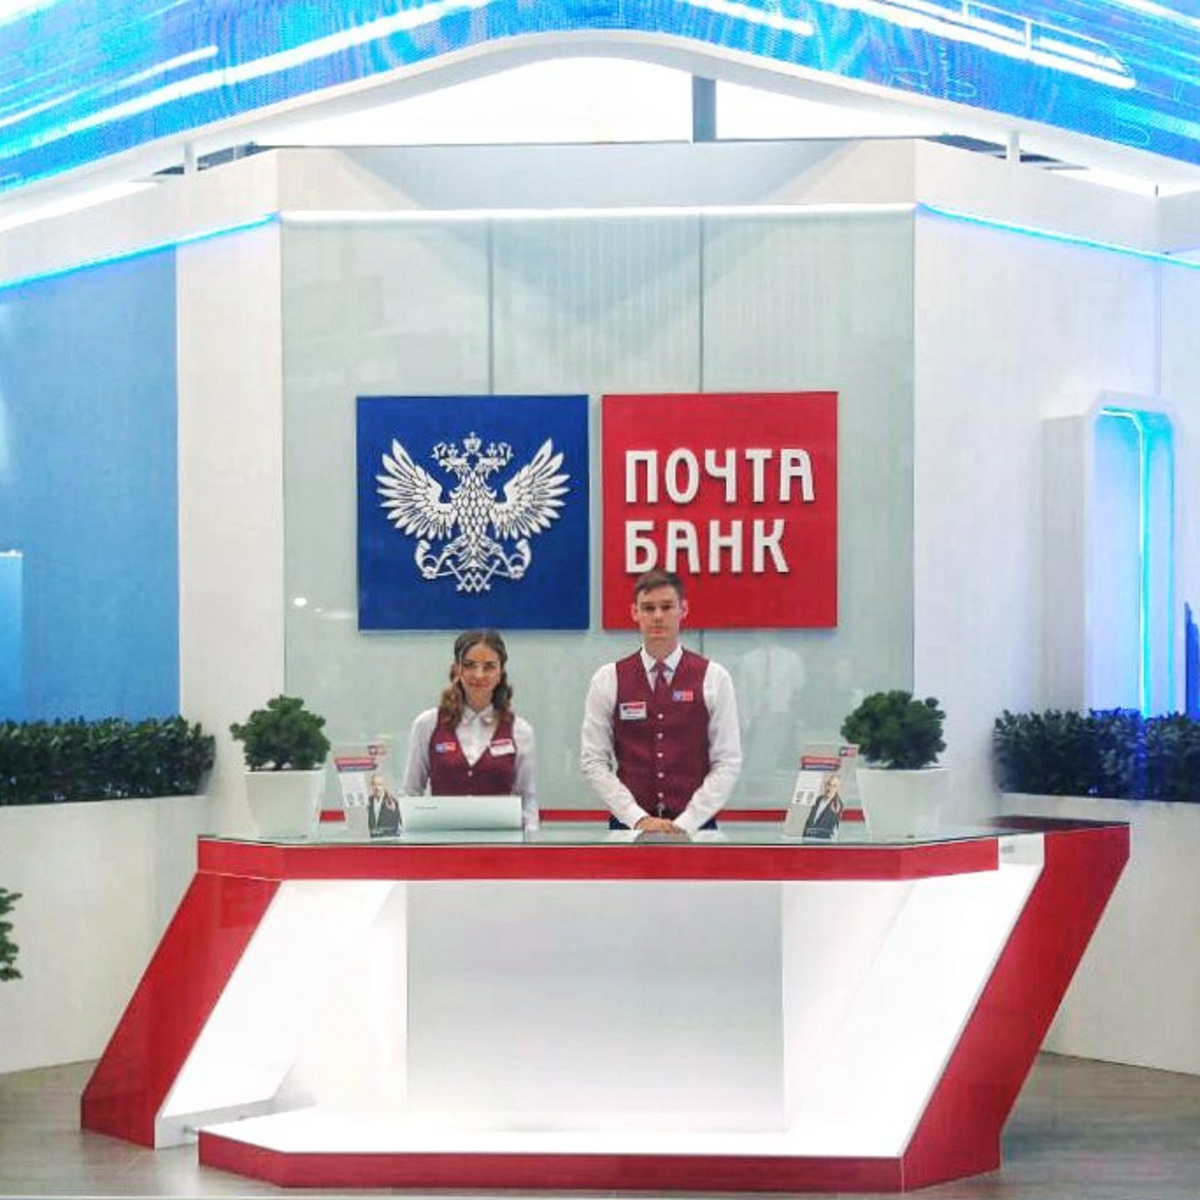 Почта банк униформа